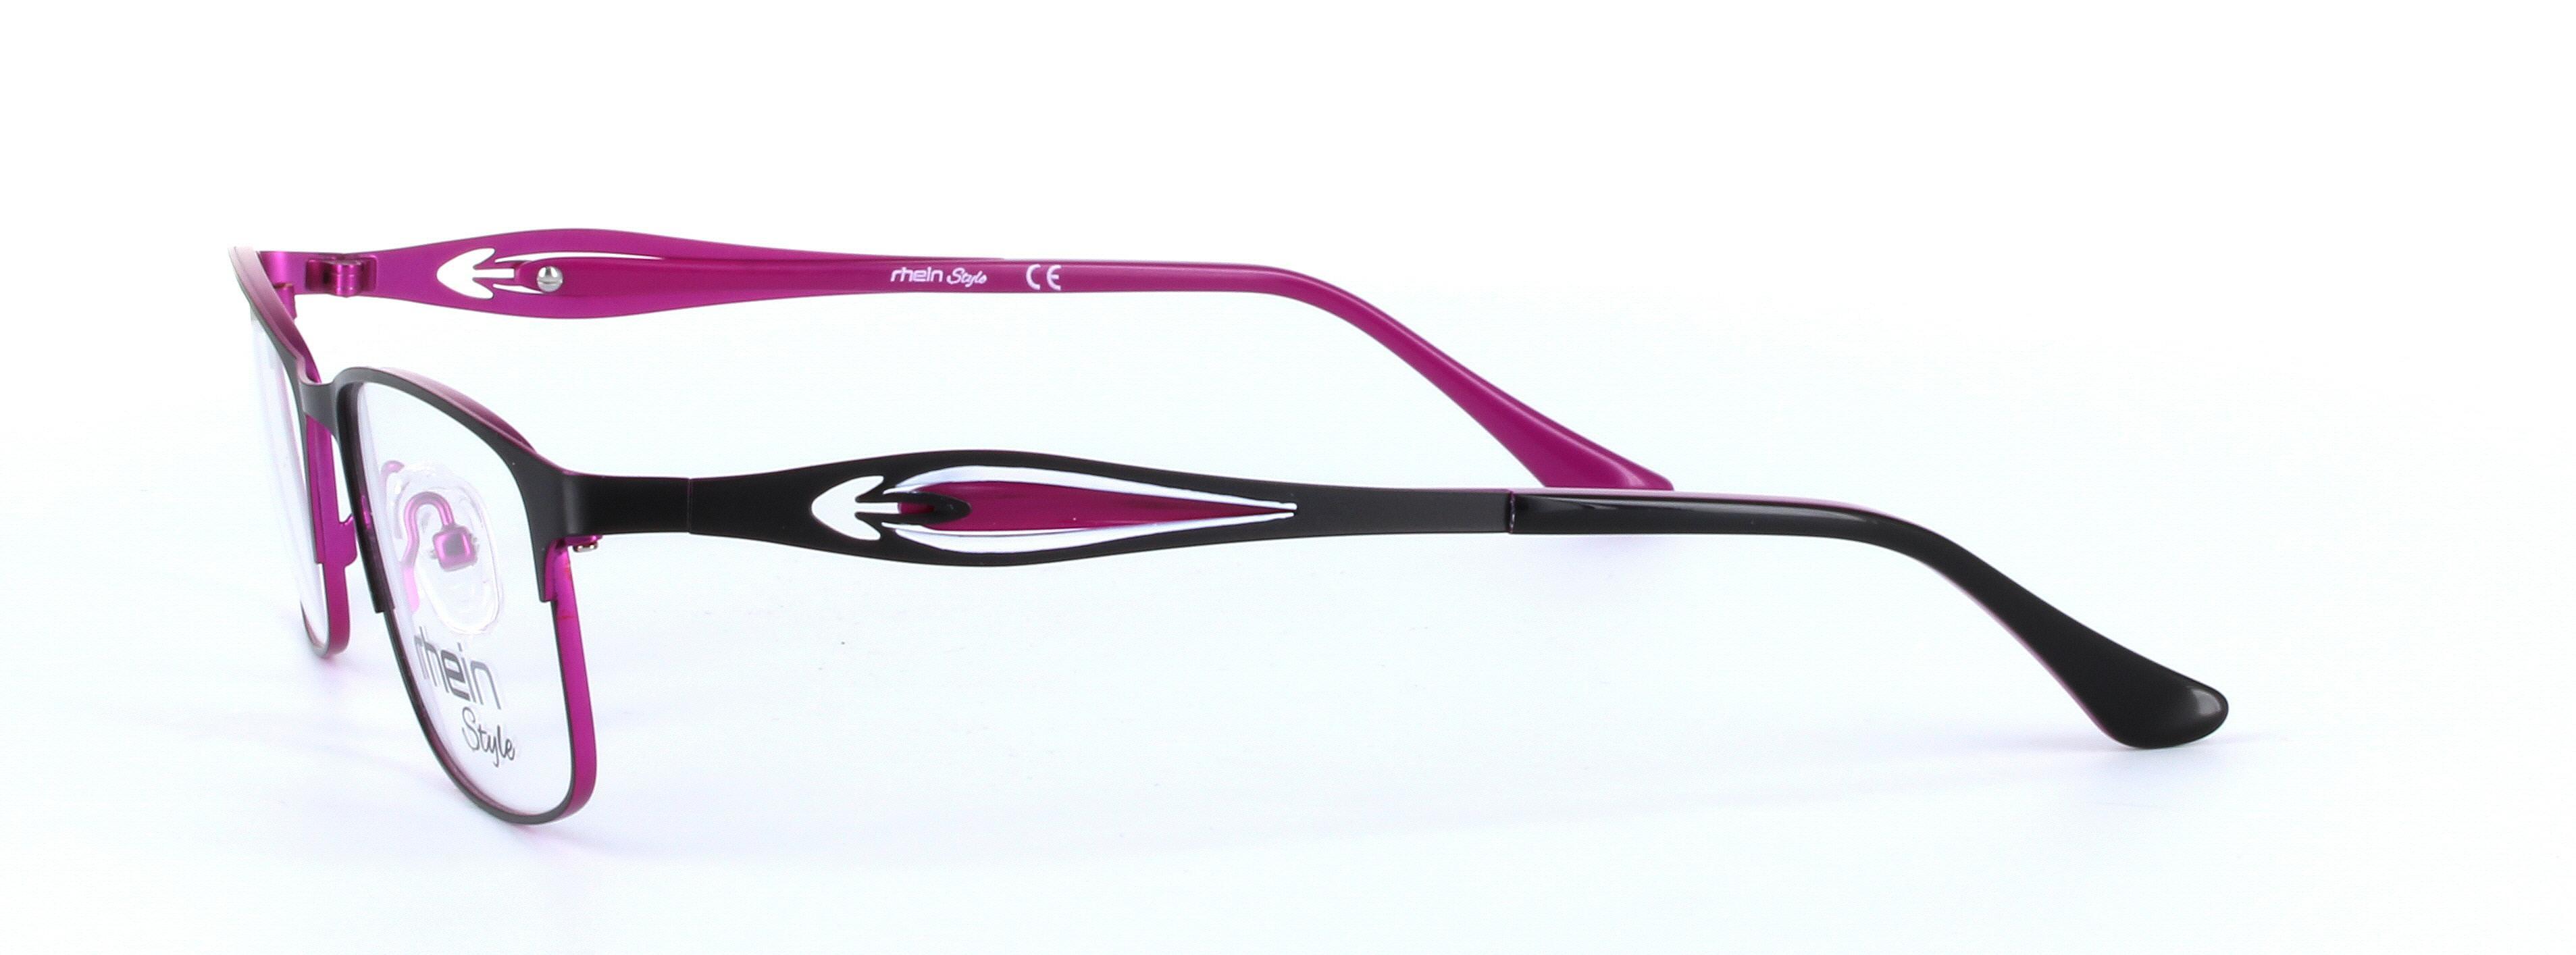 Canberra Black and Pink Full Rim Rectangular Metal Glasses - Image View 2